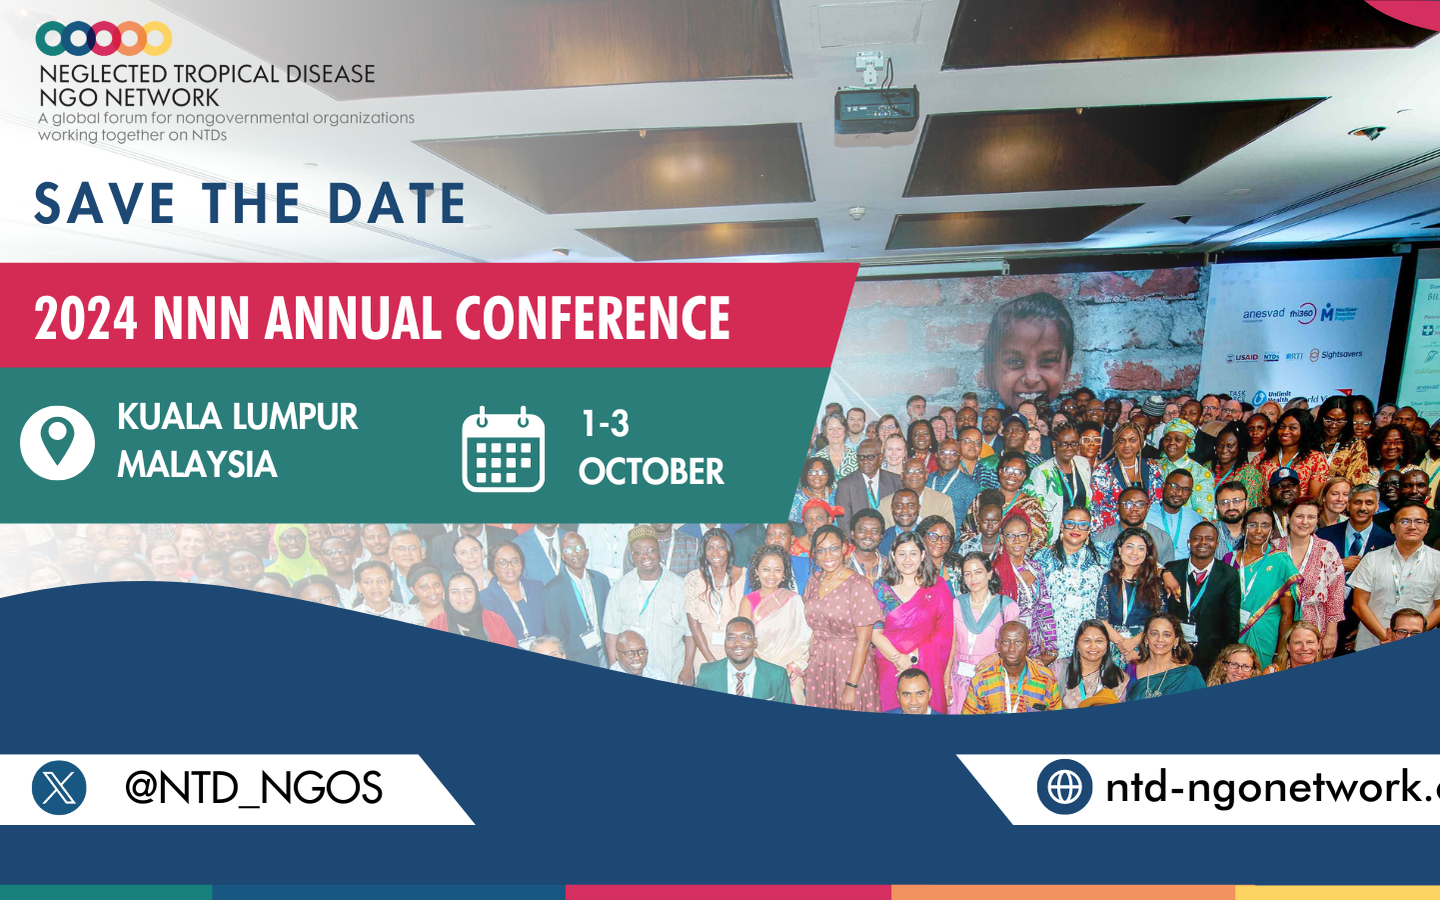 Save the date 2024 NNN Annual Conference, Kuala Lumpur Malaysia